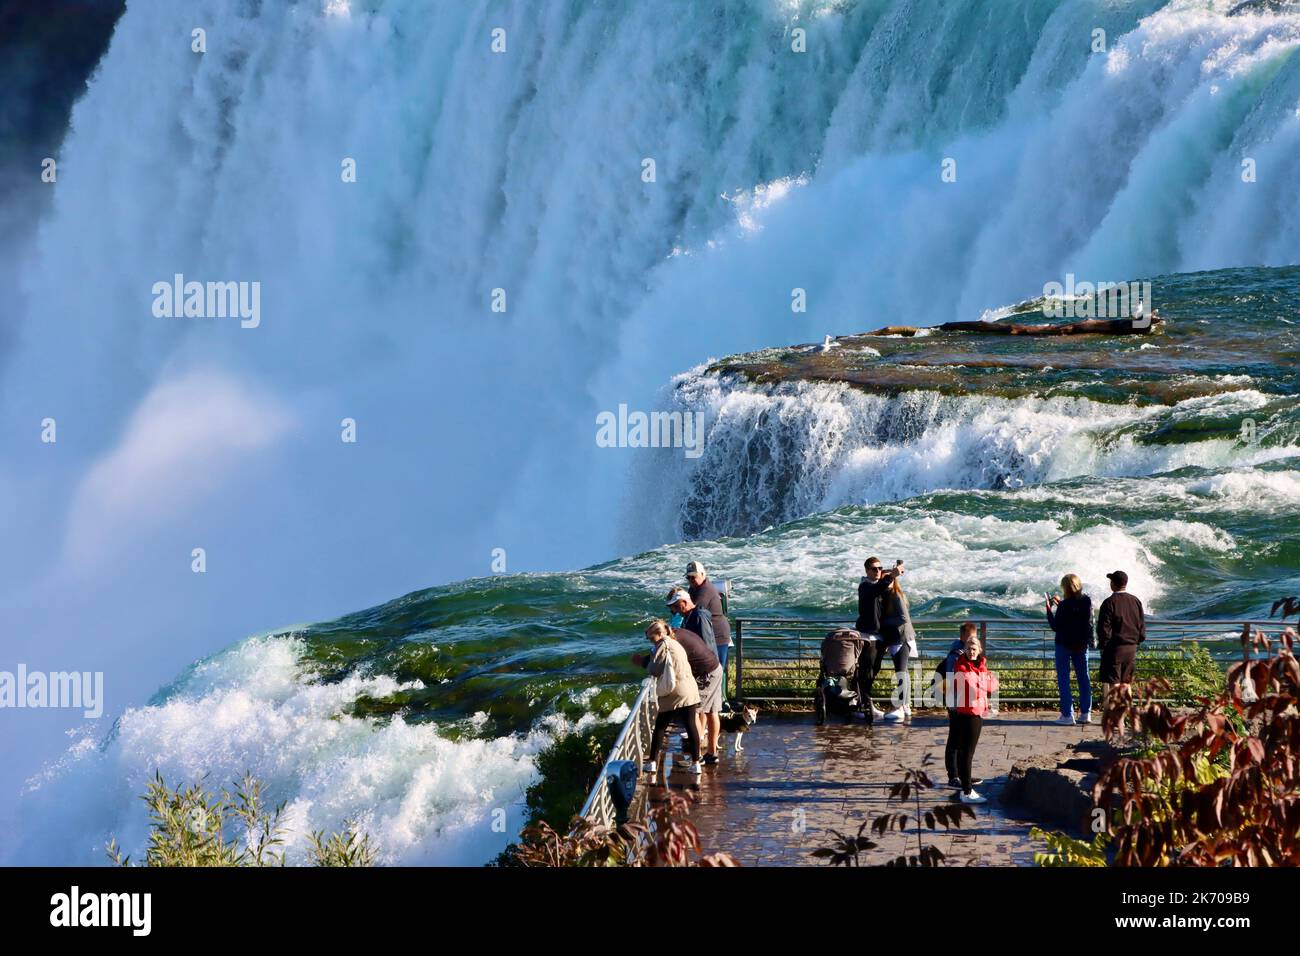 Spectators at the American Falls of Niagara Falls Stock Photo